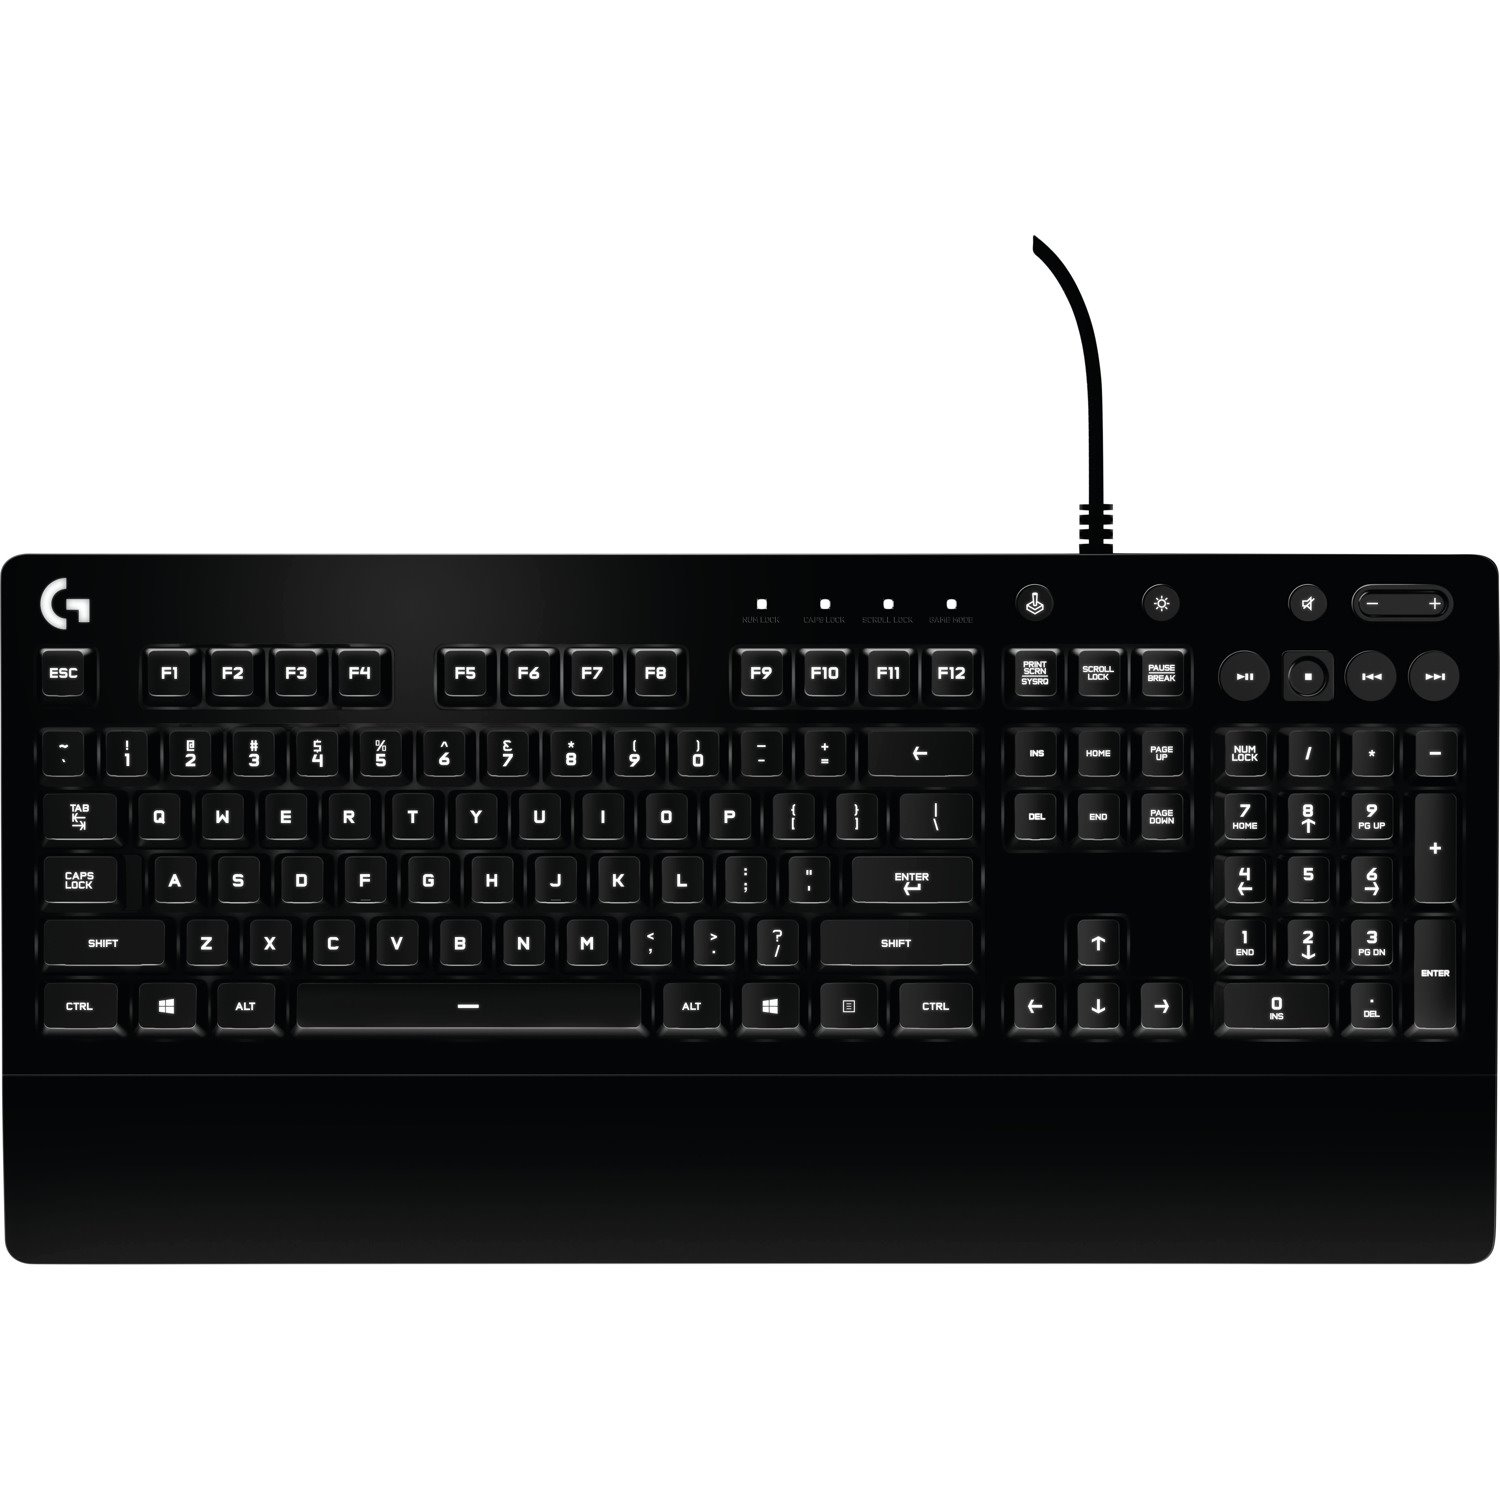 Logitech Prodigy G213 Keyboard - Cable Connectivity - USB 2.0 Interface - QWERTY Layout - Black